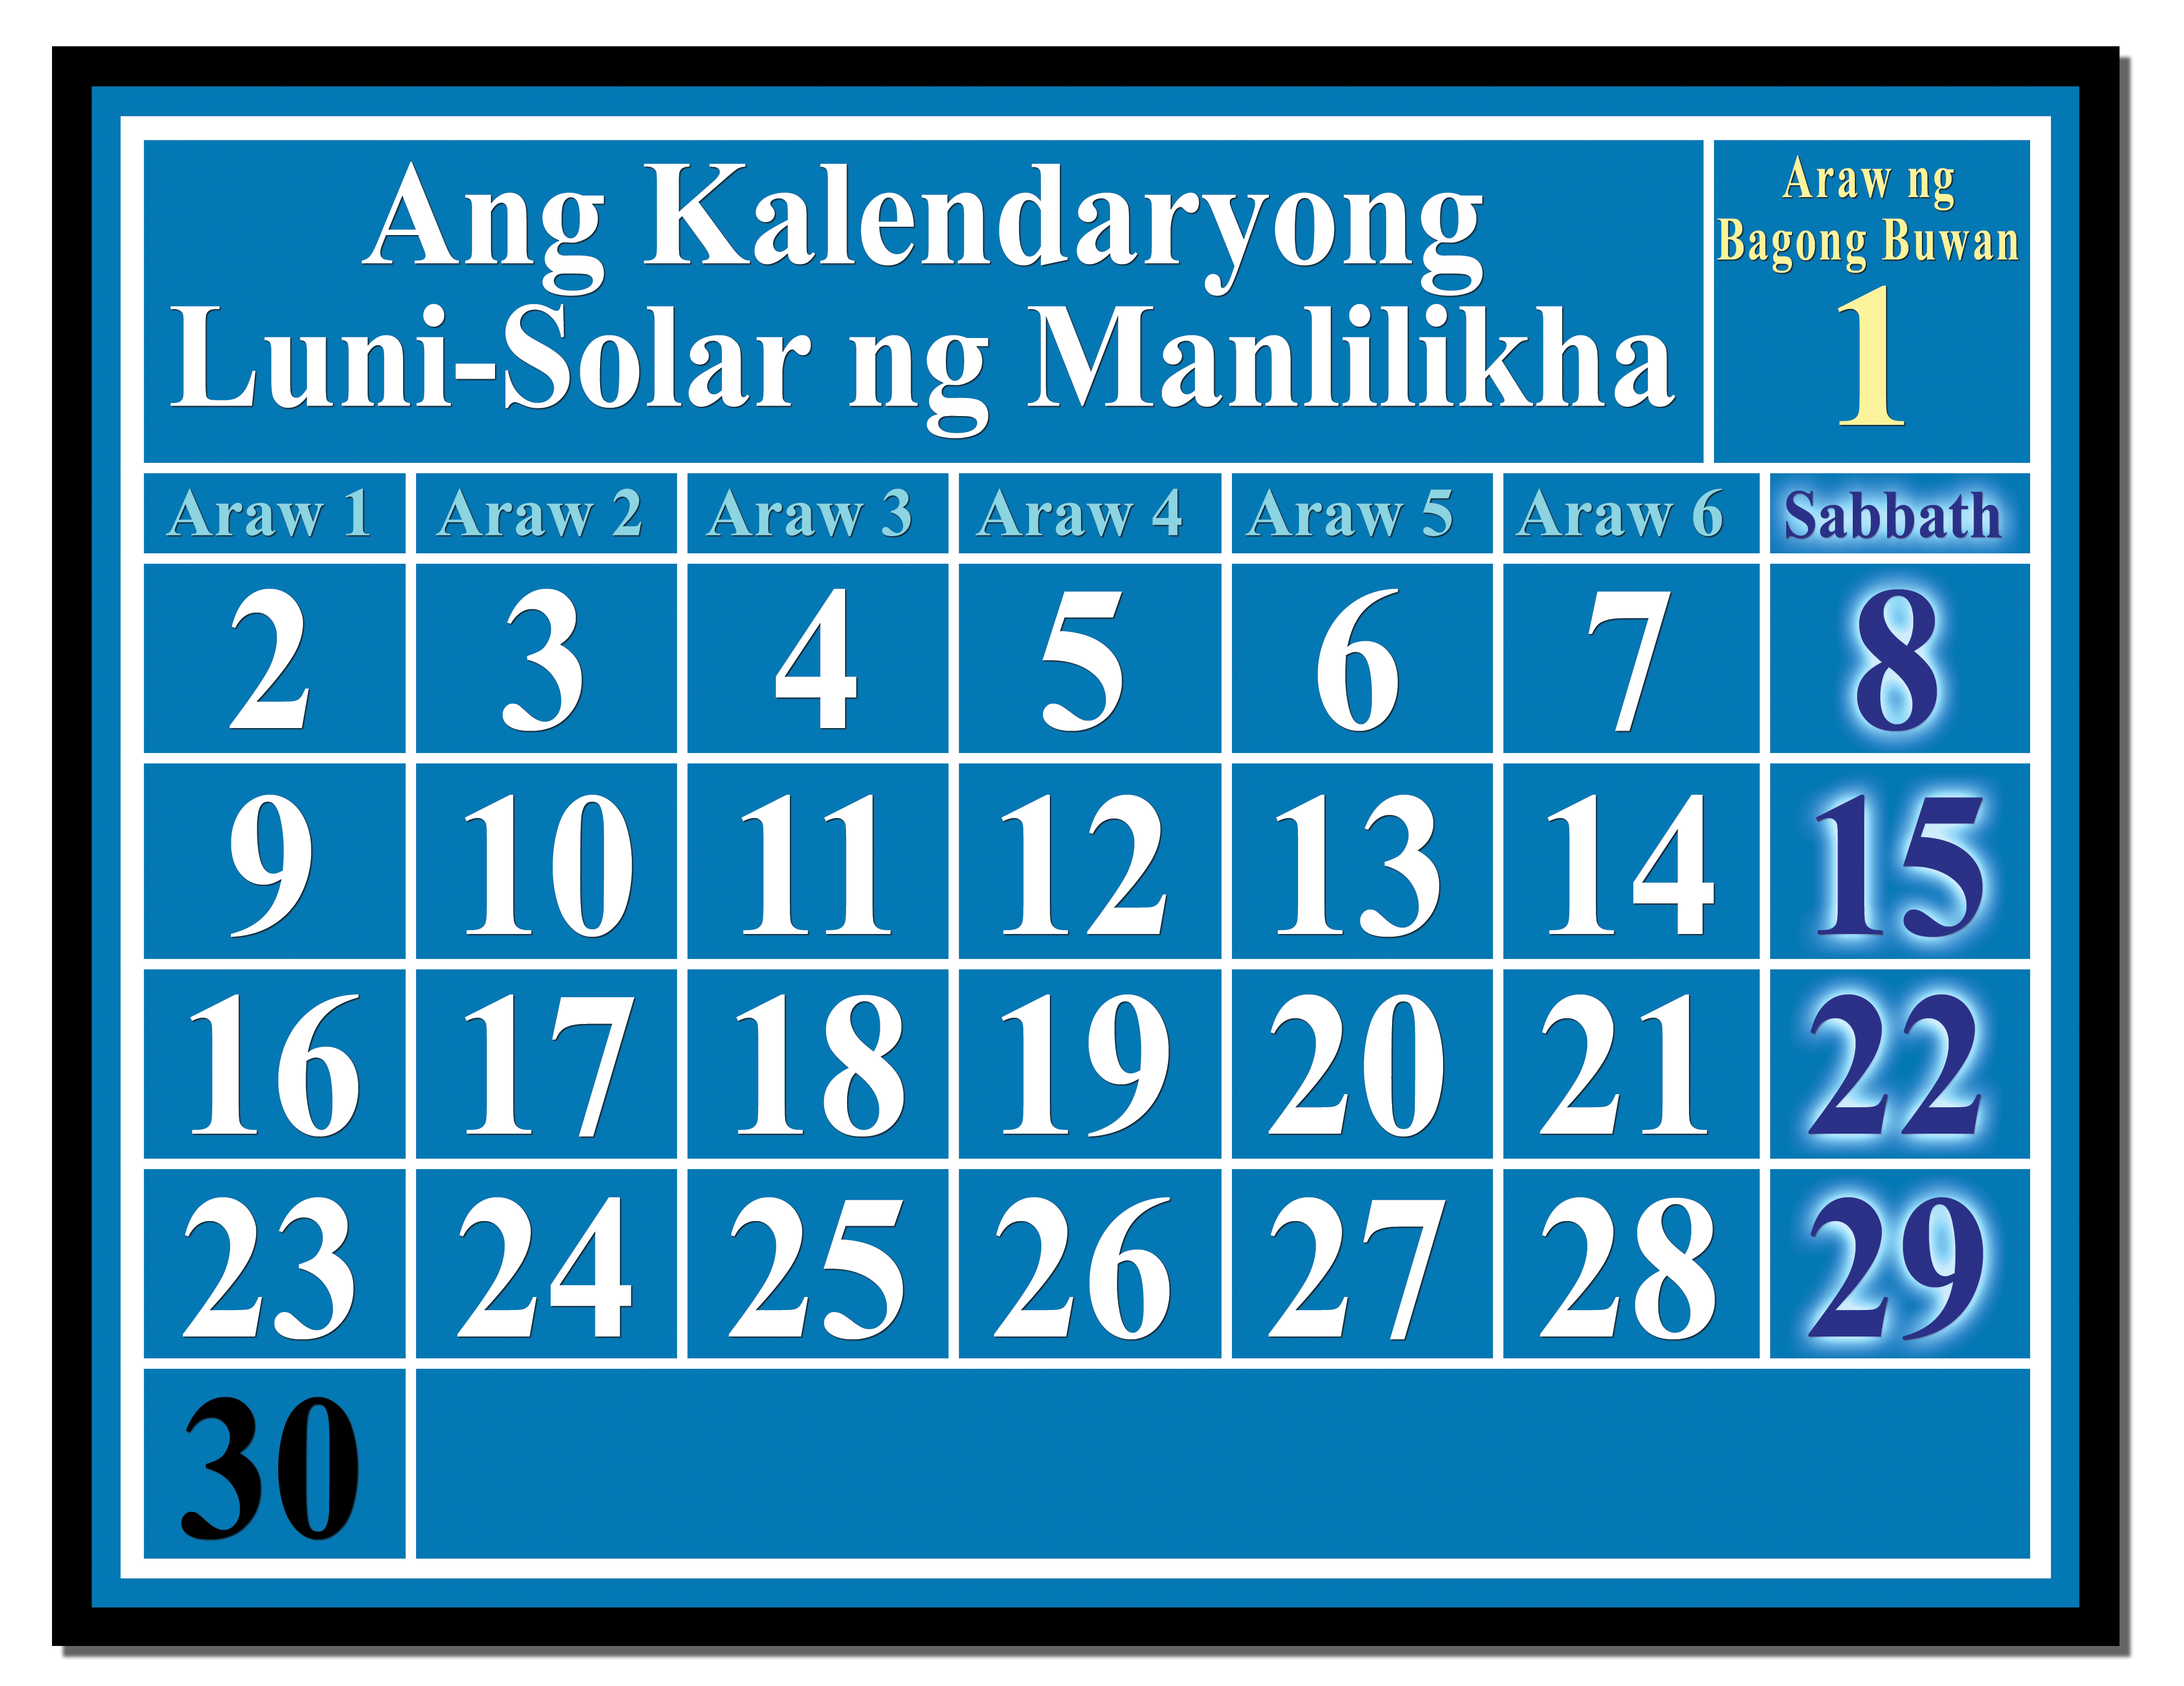 The Creator's Luni-Solar Calendar